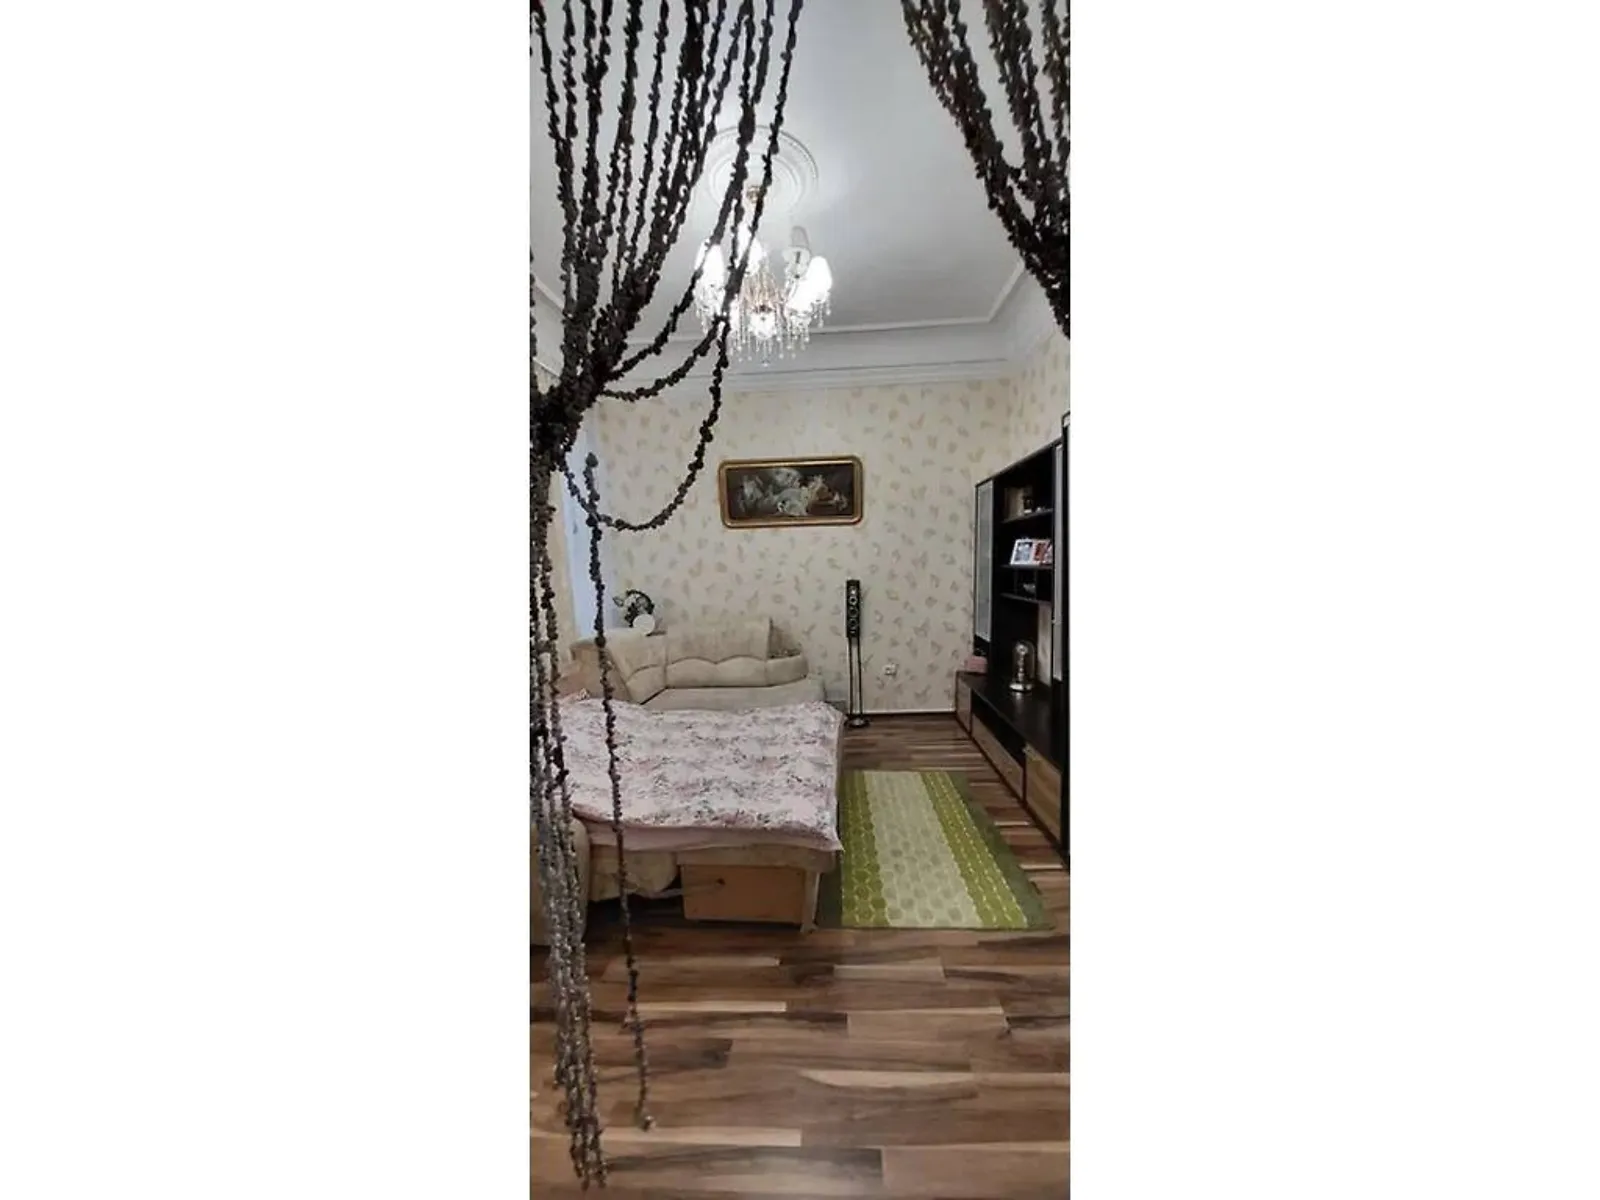 Продается комната 78 кв. м в Одессе, цена: 52000 $ - фото 1